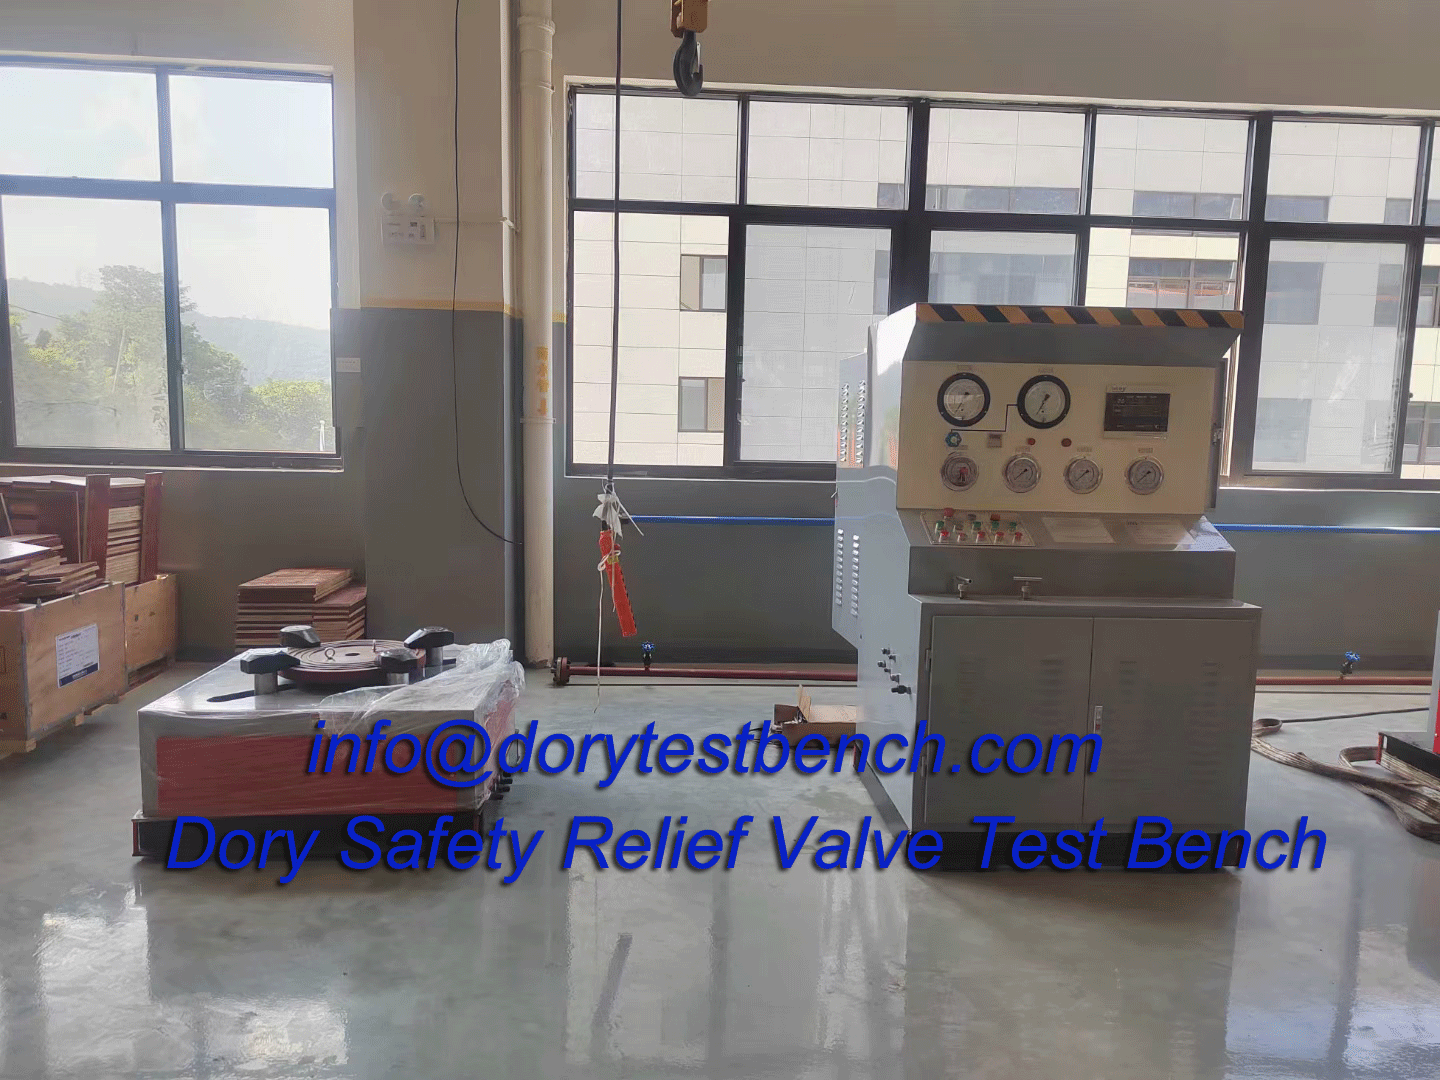 Safety Relief Valve Test Bench